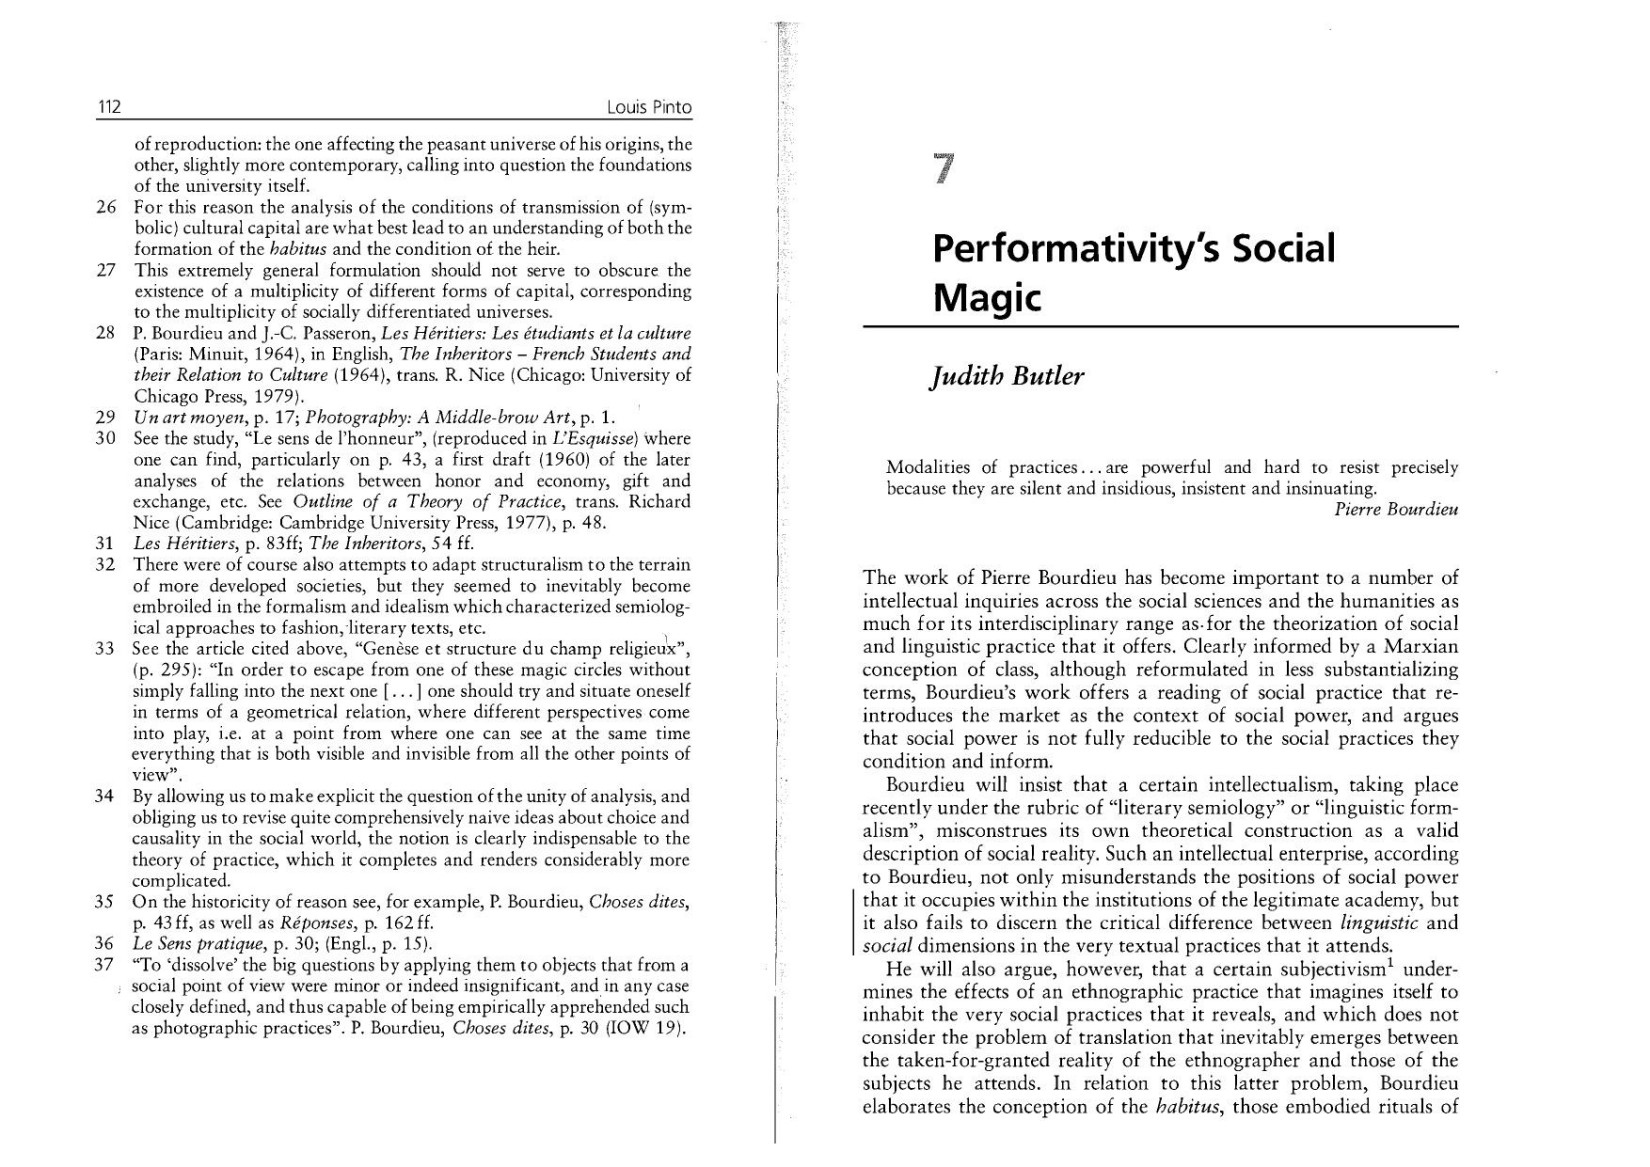 Performativity's Social Magic [On Bourdieu]